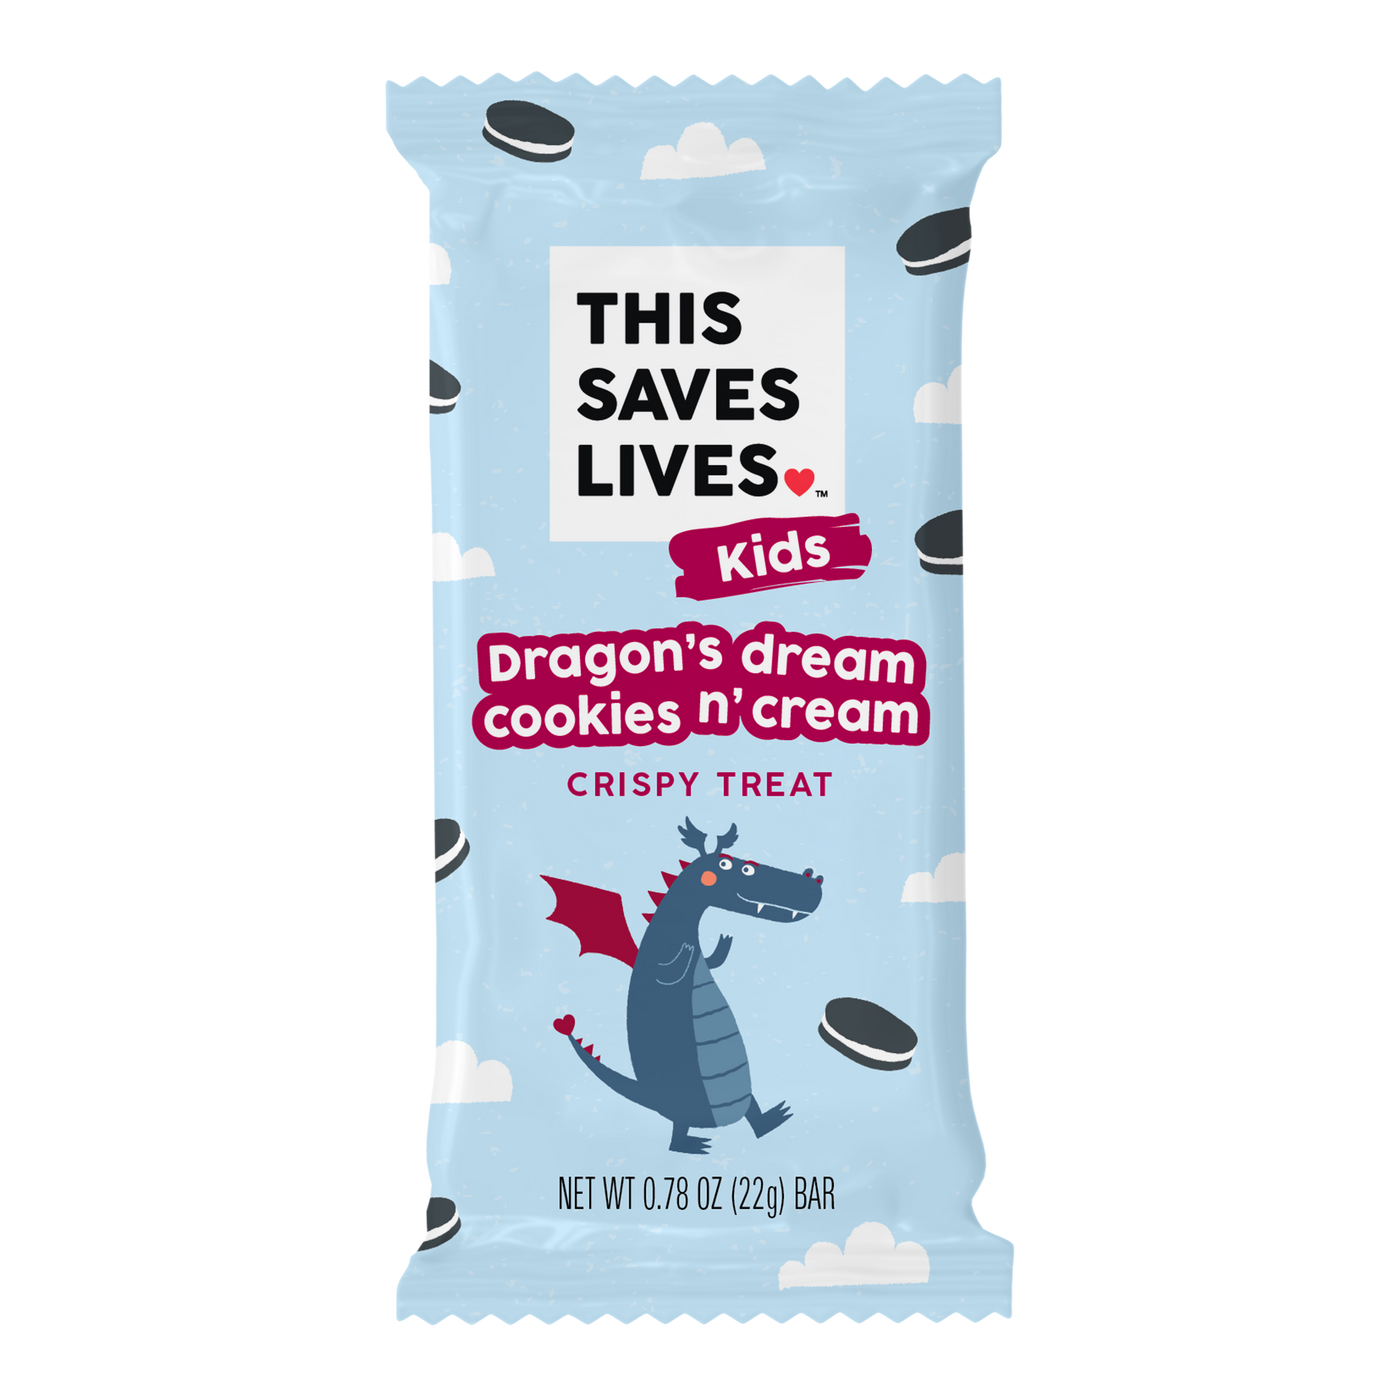 Dragon's Dream Cookies N' Cream - This Saves Lives - Krispy Treat